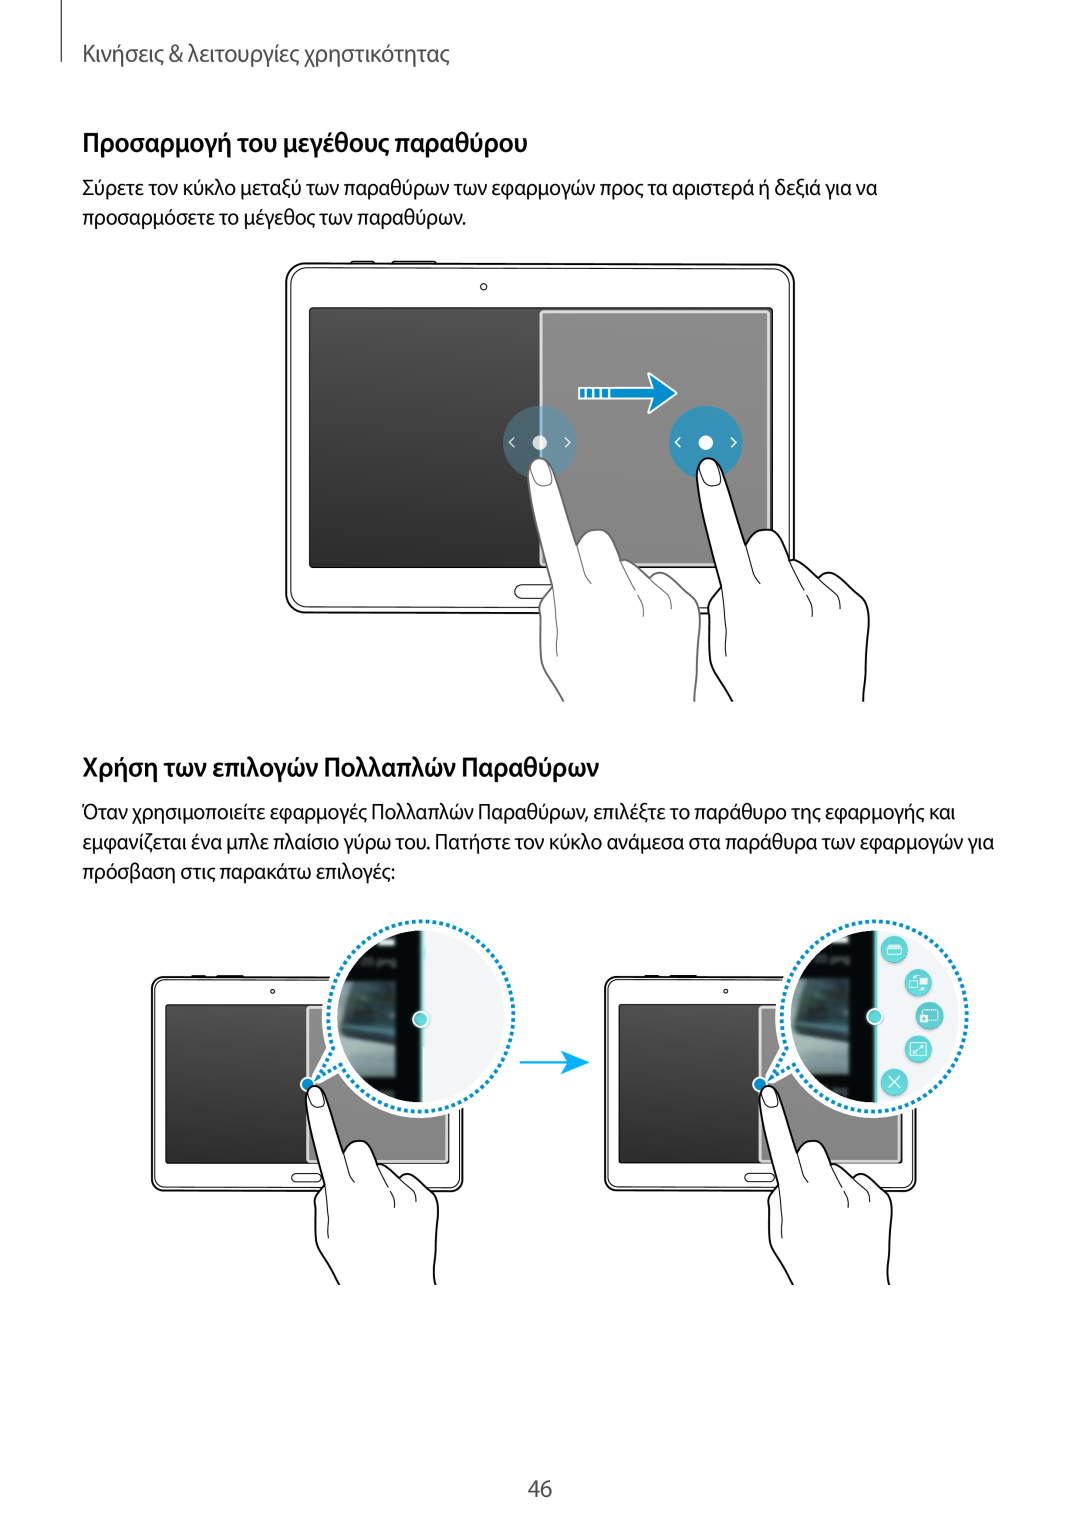 Samsung SM-T805NTSAEUR, SM-T805NZWAEUR manual Προσαρμογή του μεγέθους παραθύρου, Χρήση των επιλογών Πολλαπλών Παραθύρων 